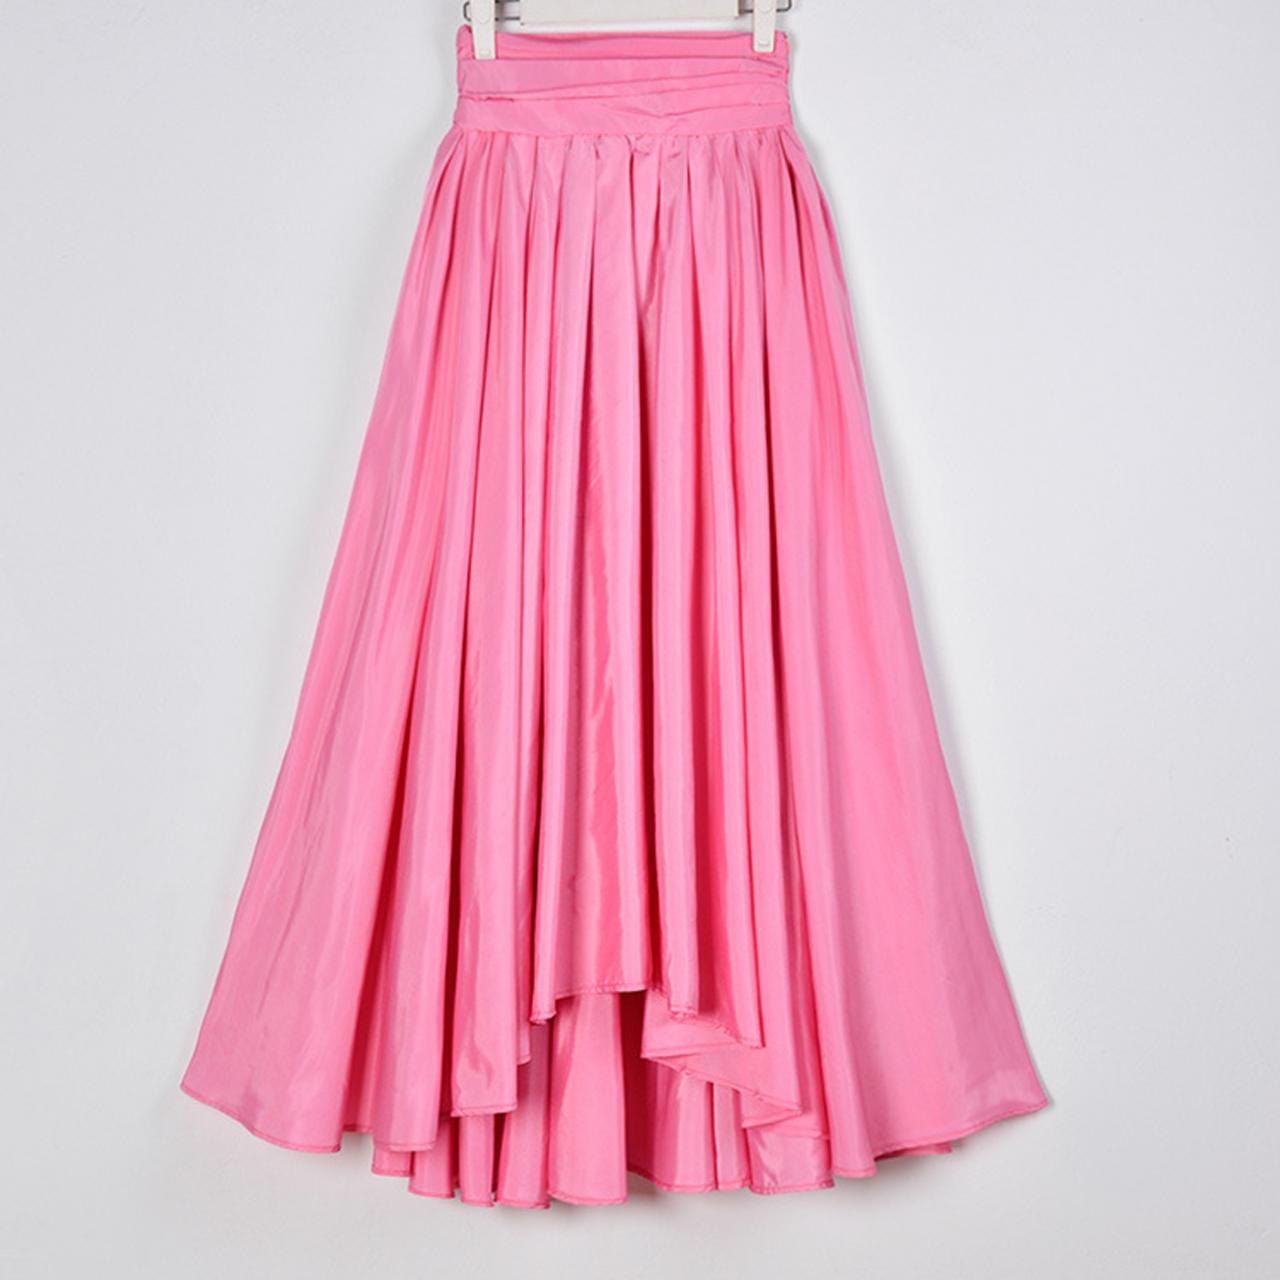 pink long skirt